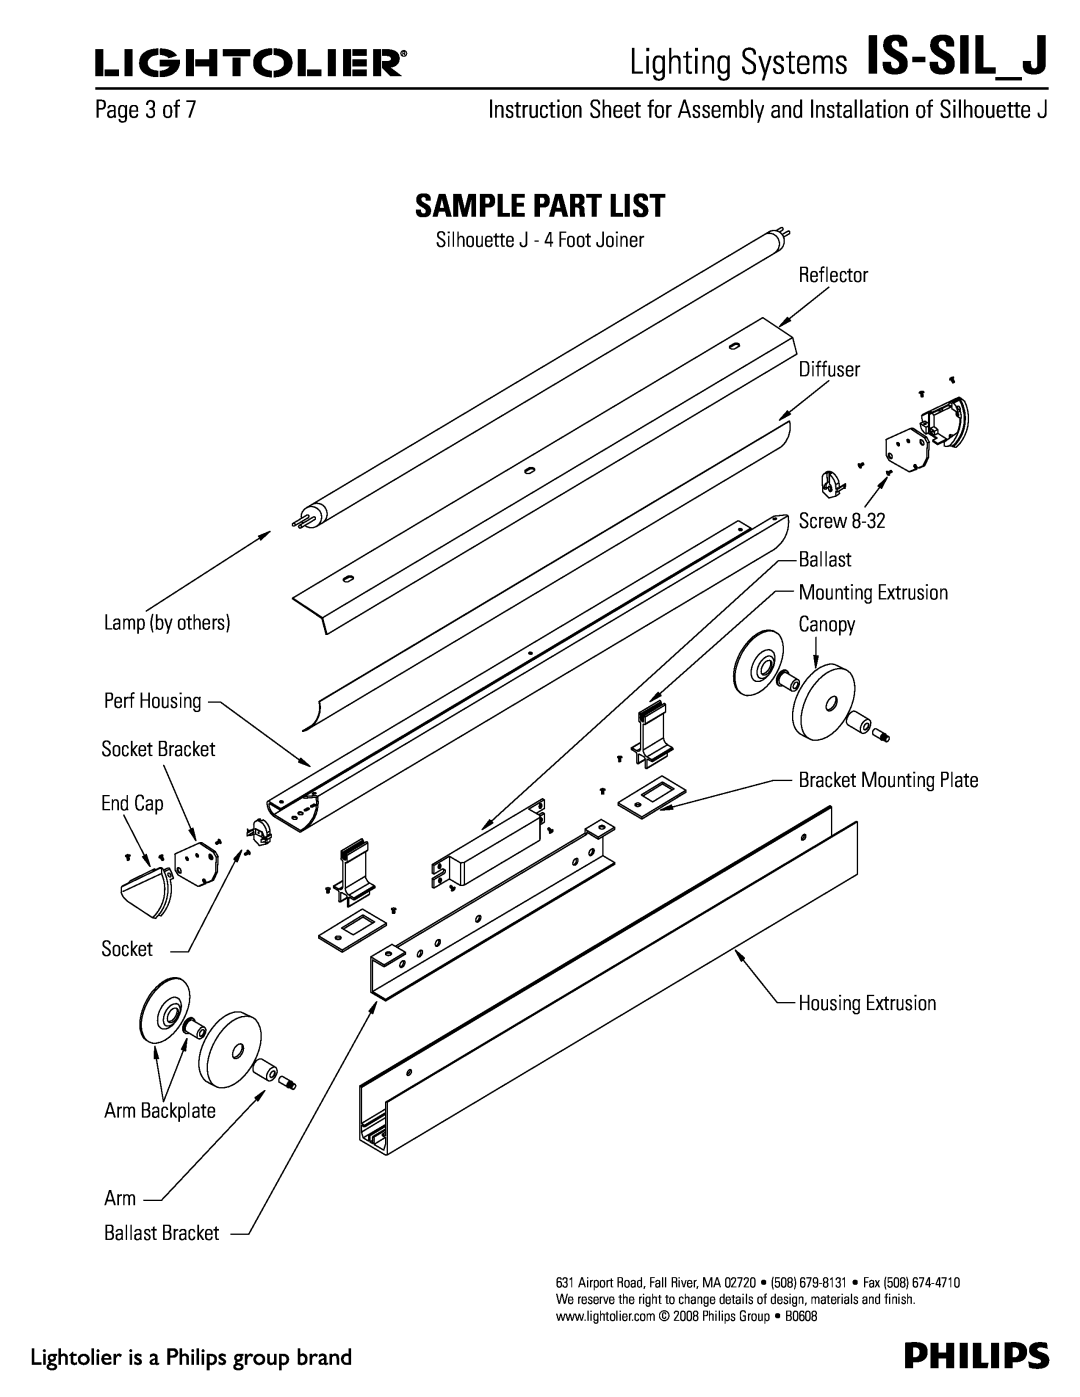 Lightolier IS-SIL_J manual Sample Part List, 1BHFPG, Lamp by others, End Cap Socket Arm Backplate Arm Ballast Bracket 